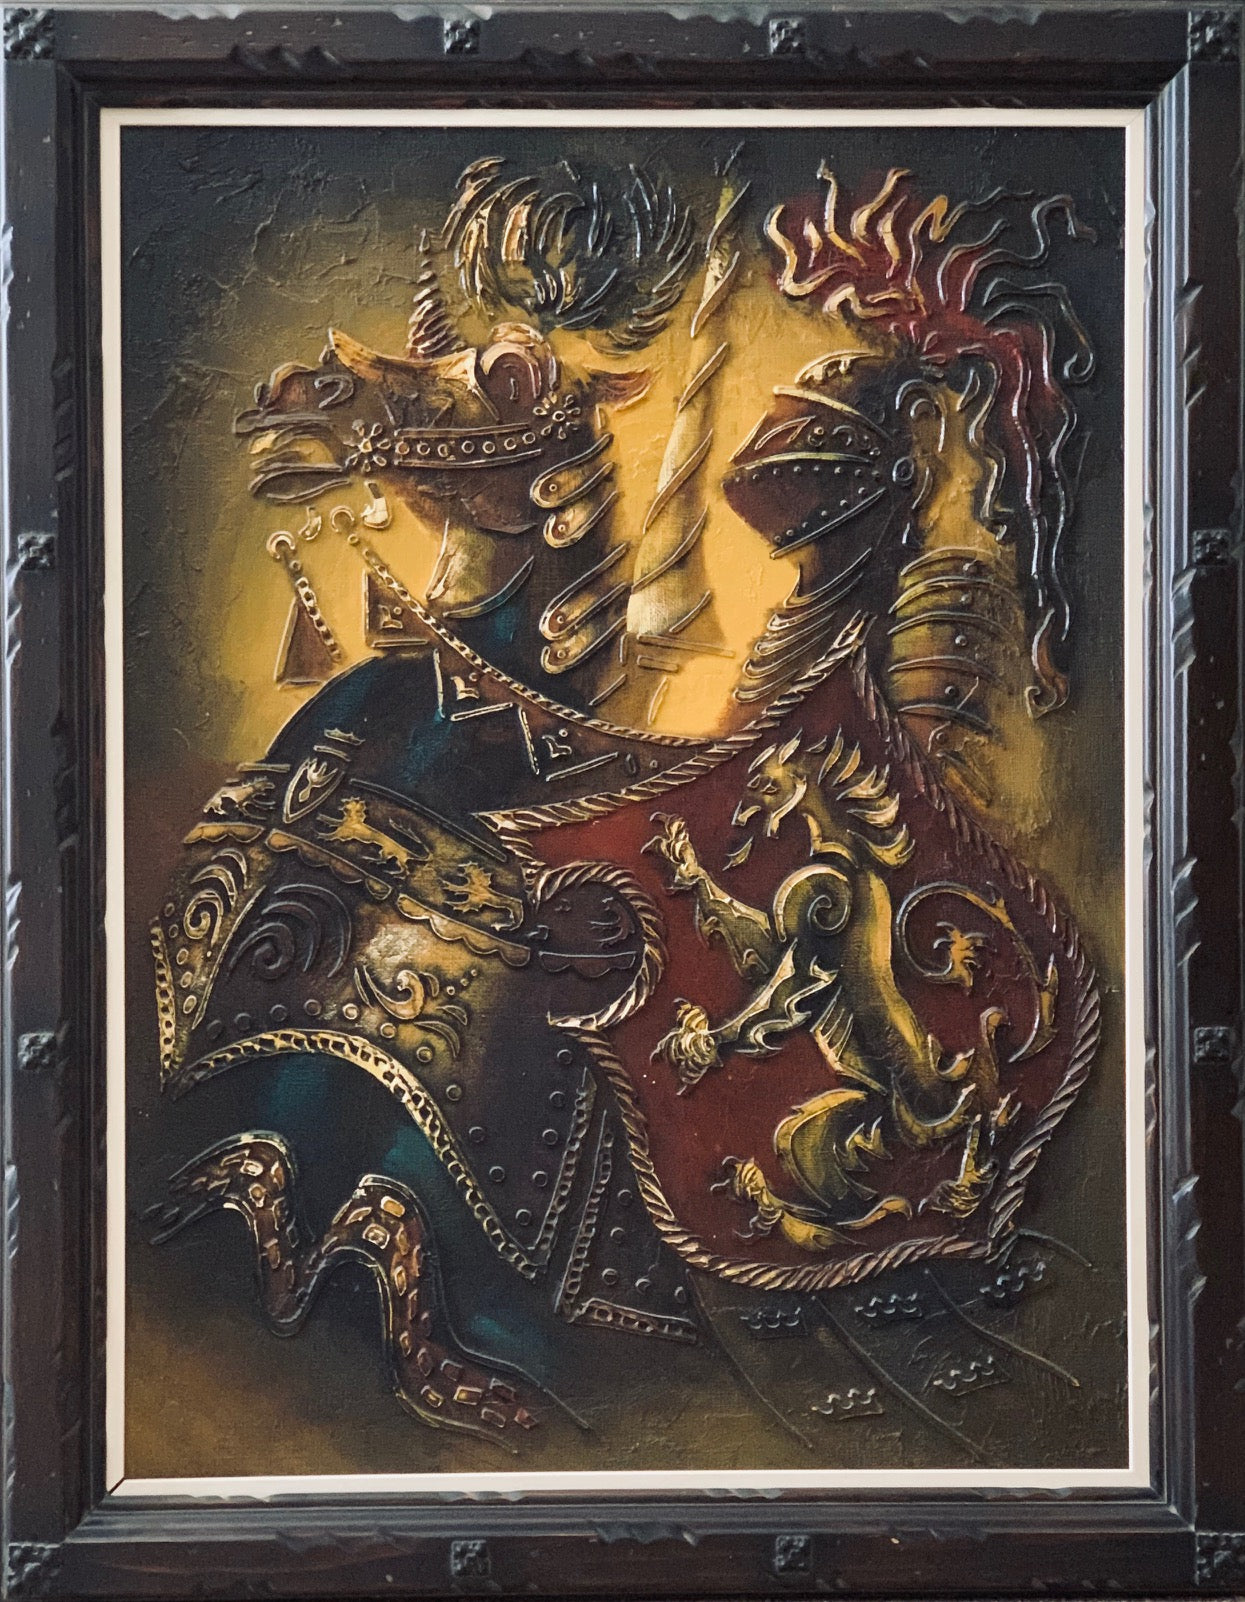 Elegant & Rustic - Painting of a Valiant Night Warrior